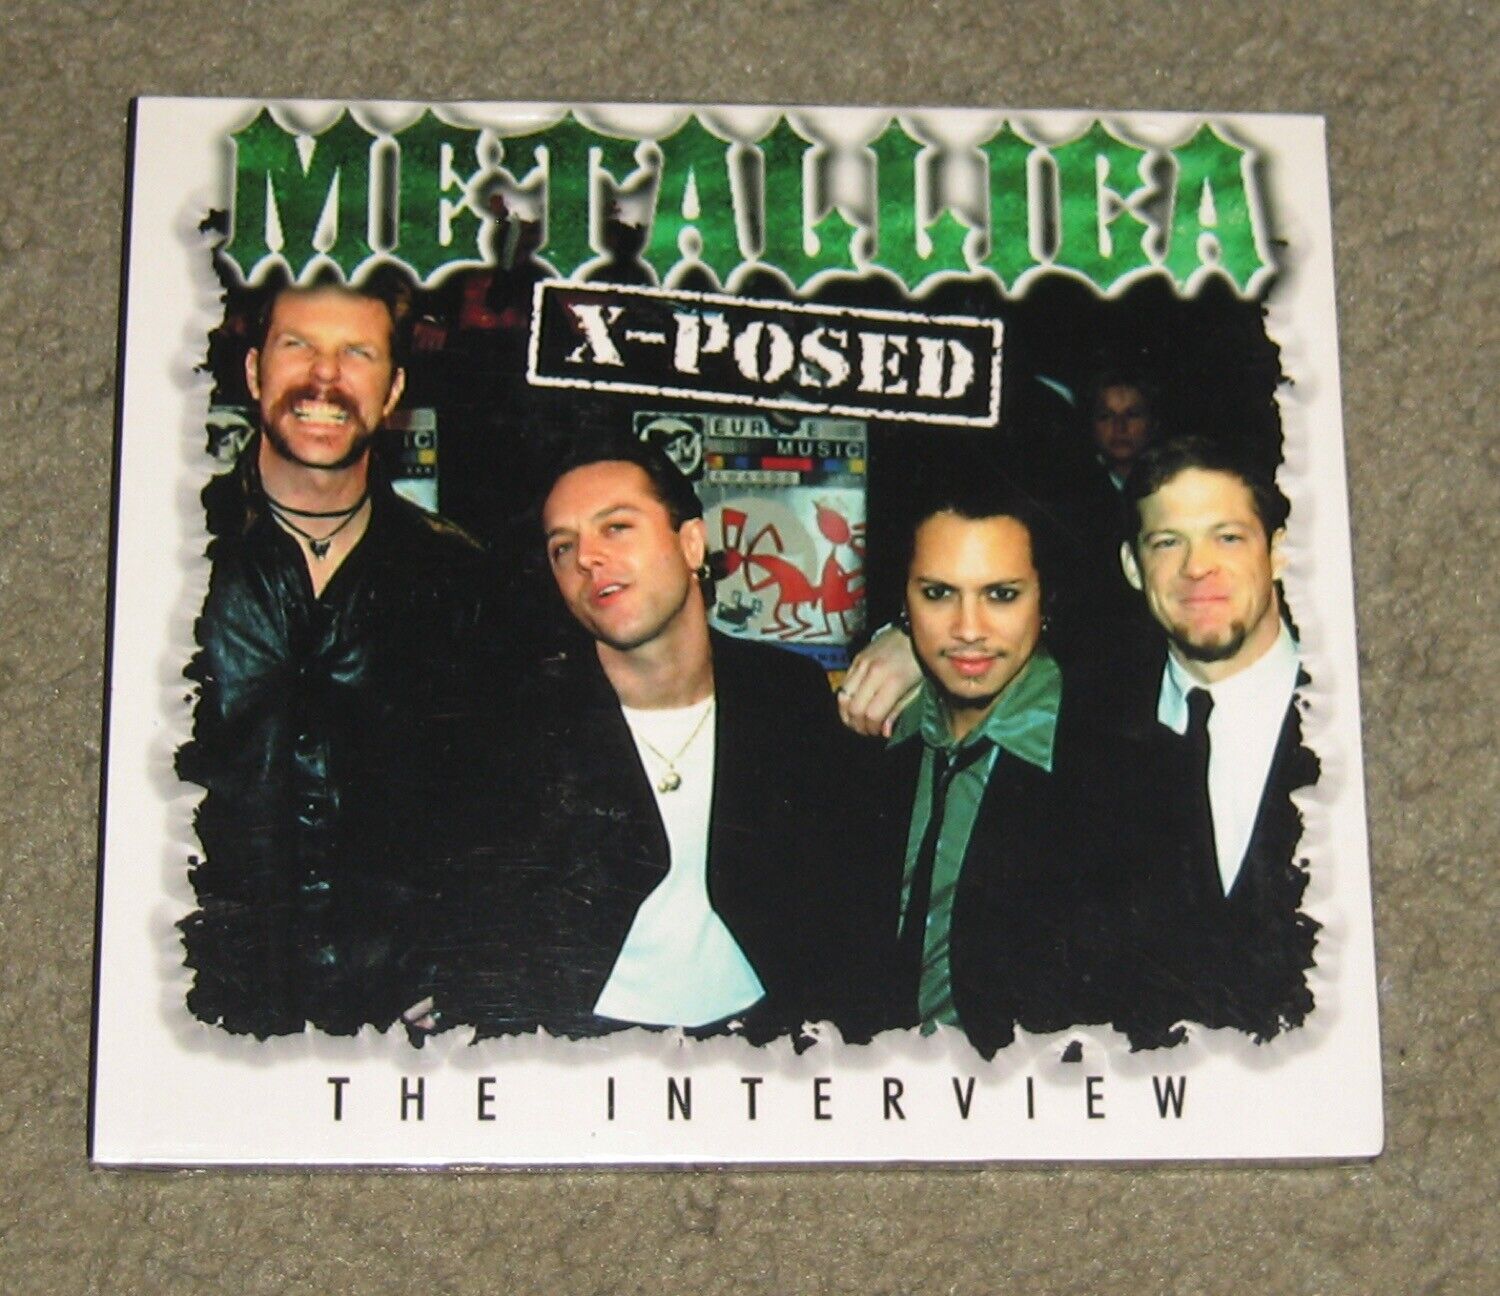 Metallica - Metallica X-Posed: The Interview (CD, 2000, Chrome Dreams)